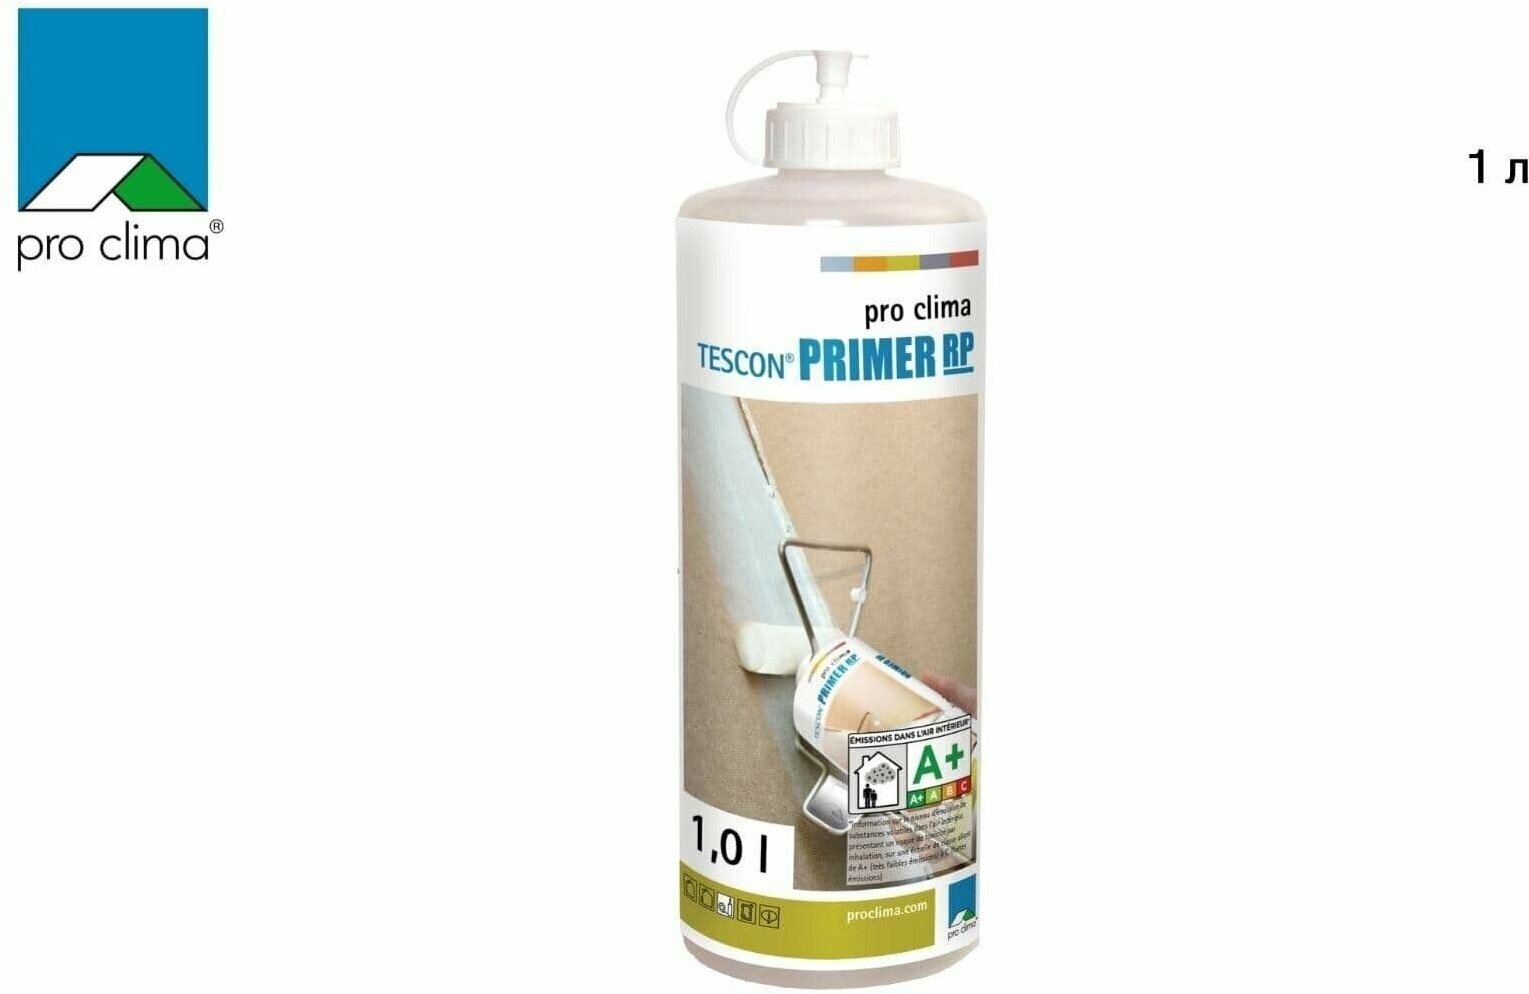 Адгезионная грунтовка Pro clima TESCON PRIMER RP праймер (1 л) - фотография № 1